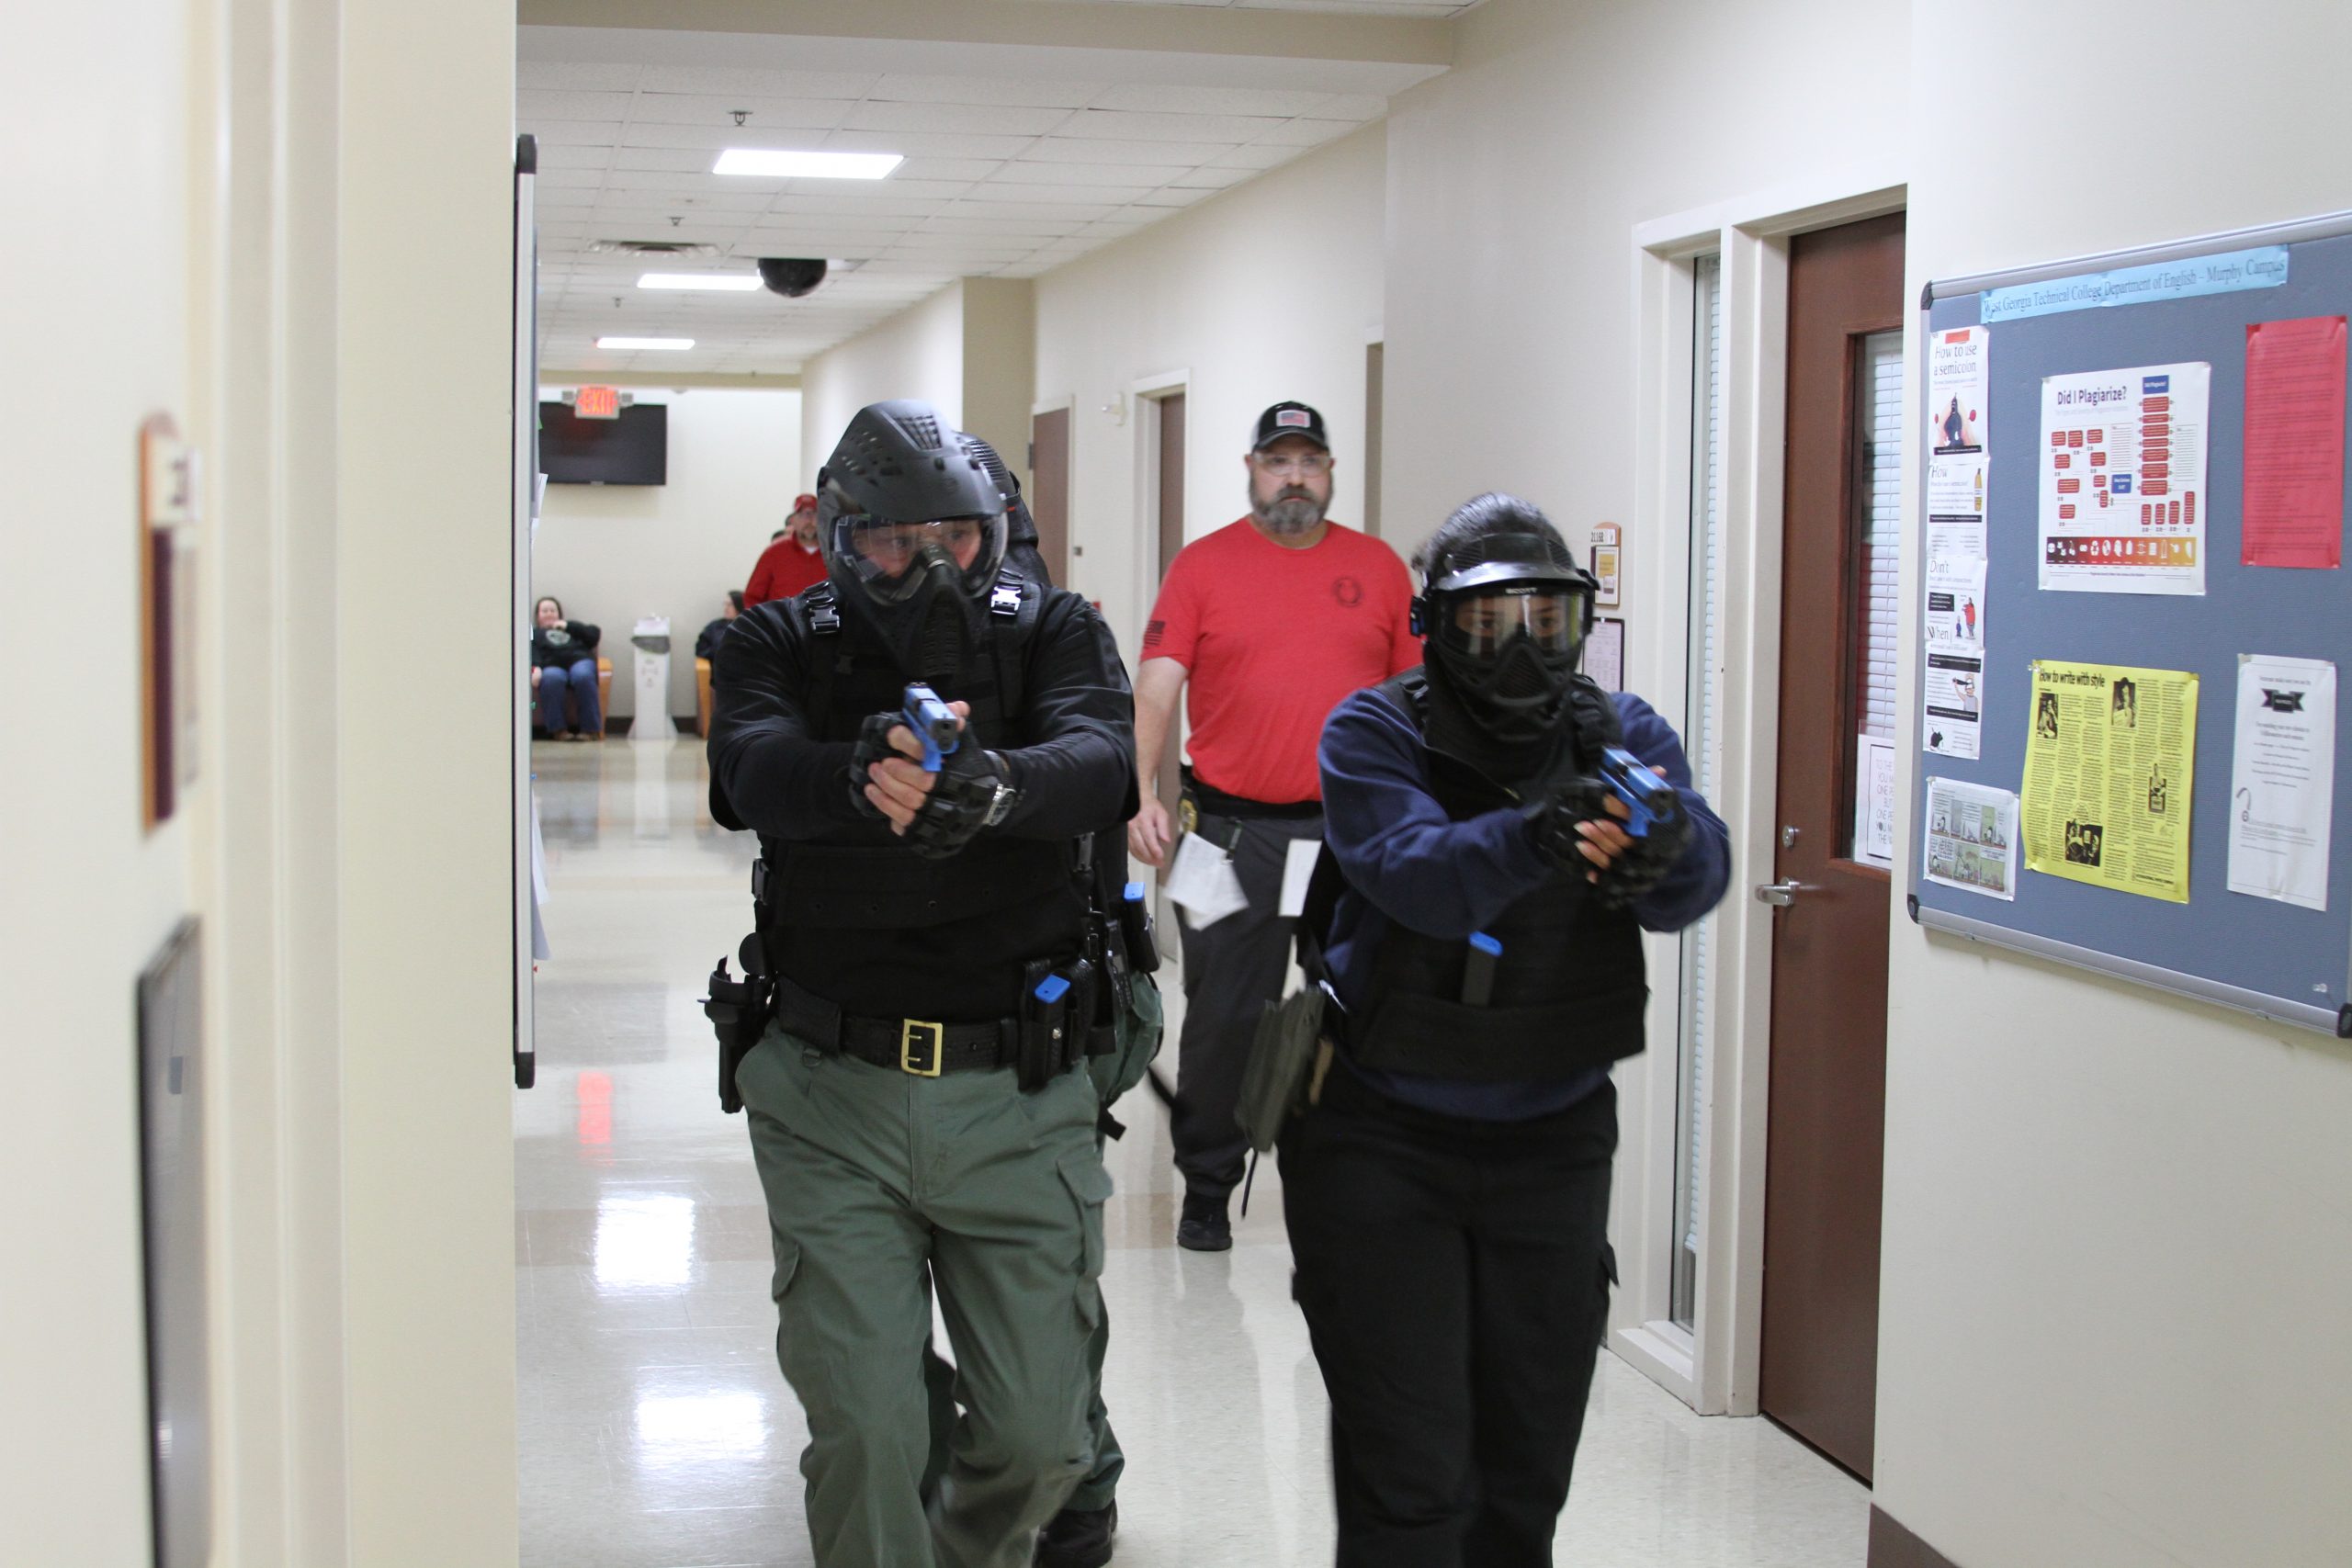 officer trainees in gear training in hallway